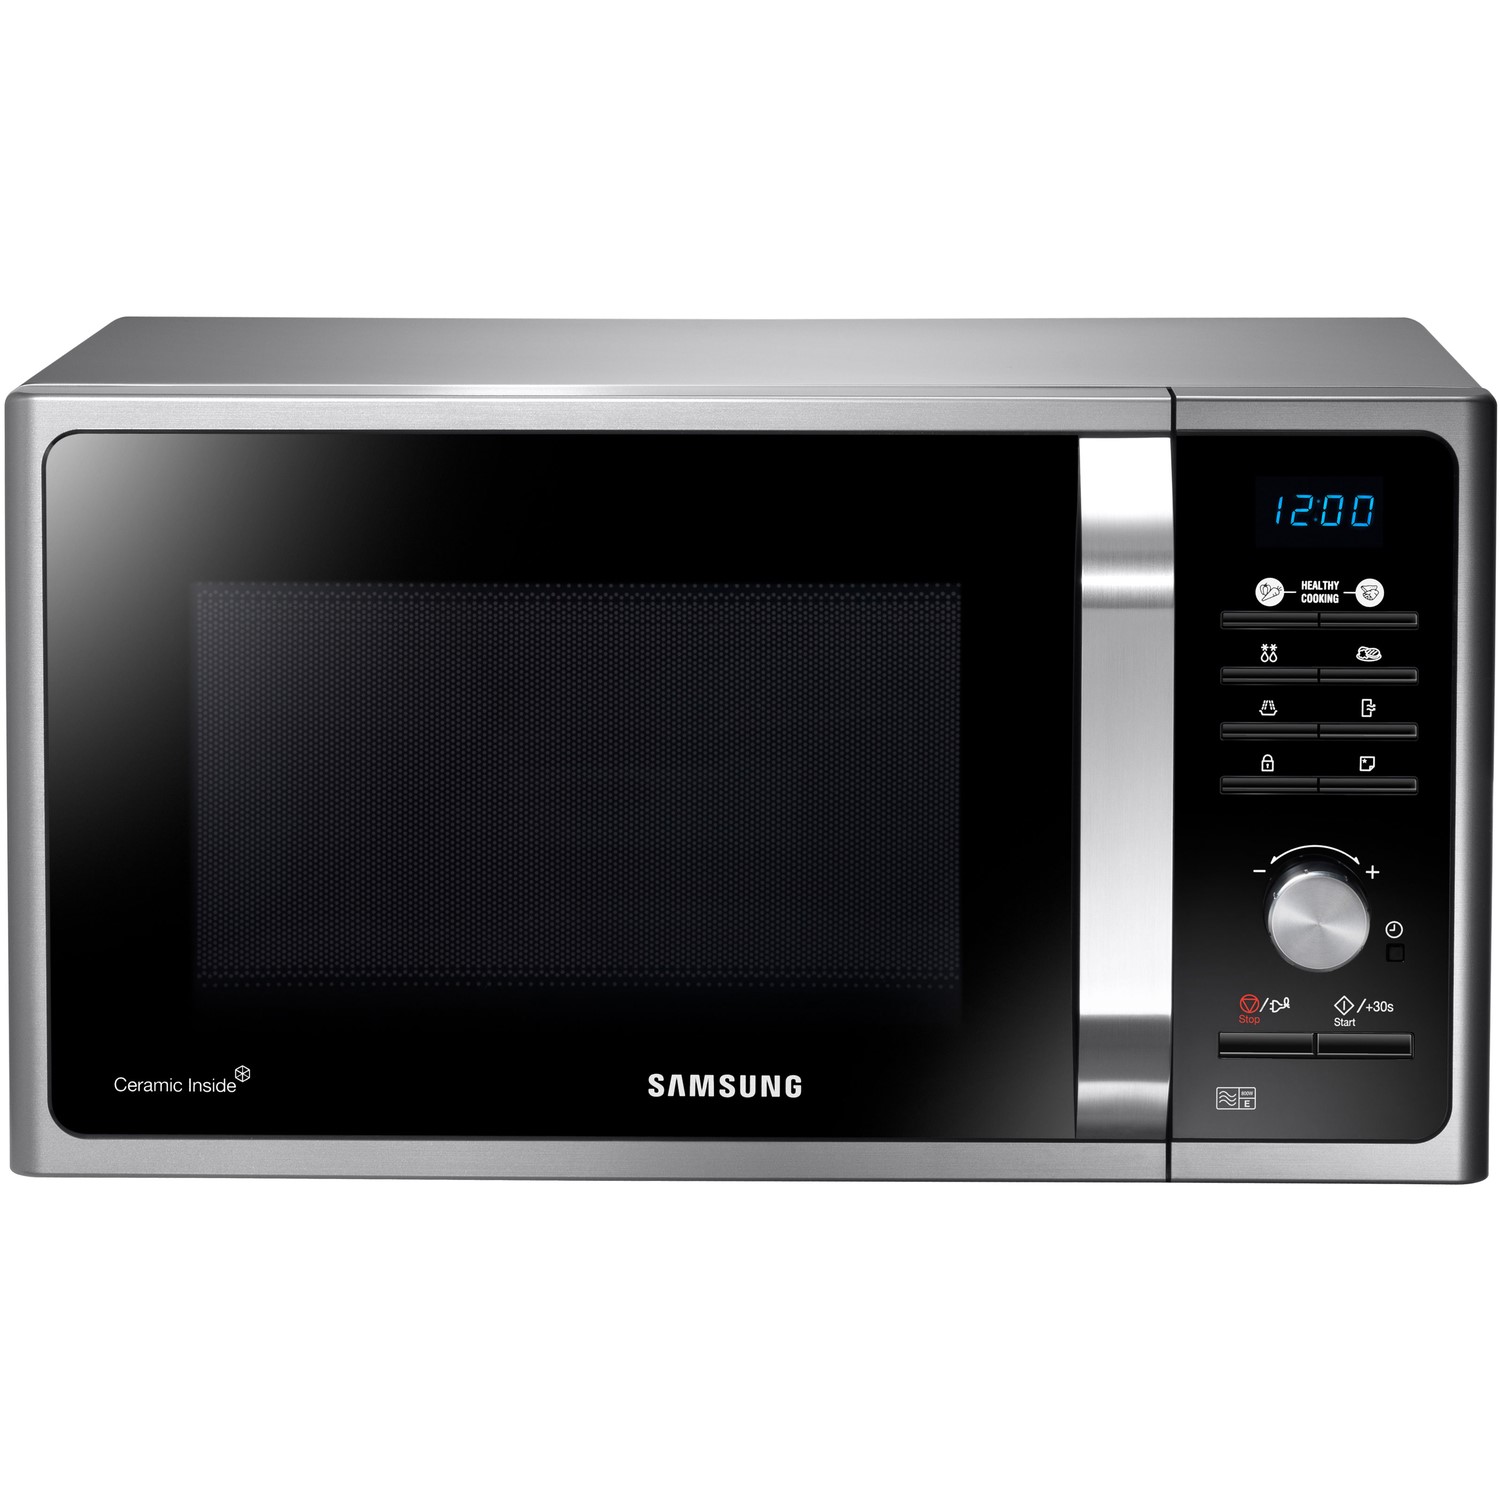 Samsung 23 Litre Microwave - Silver